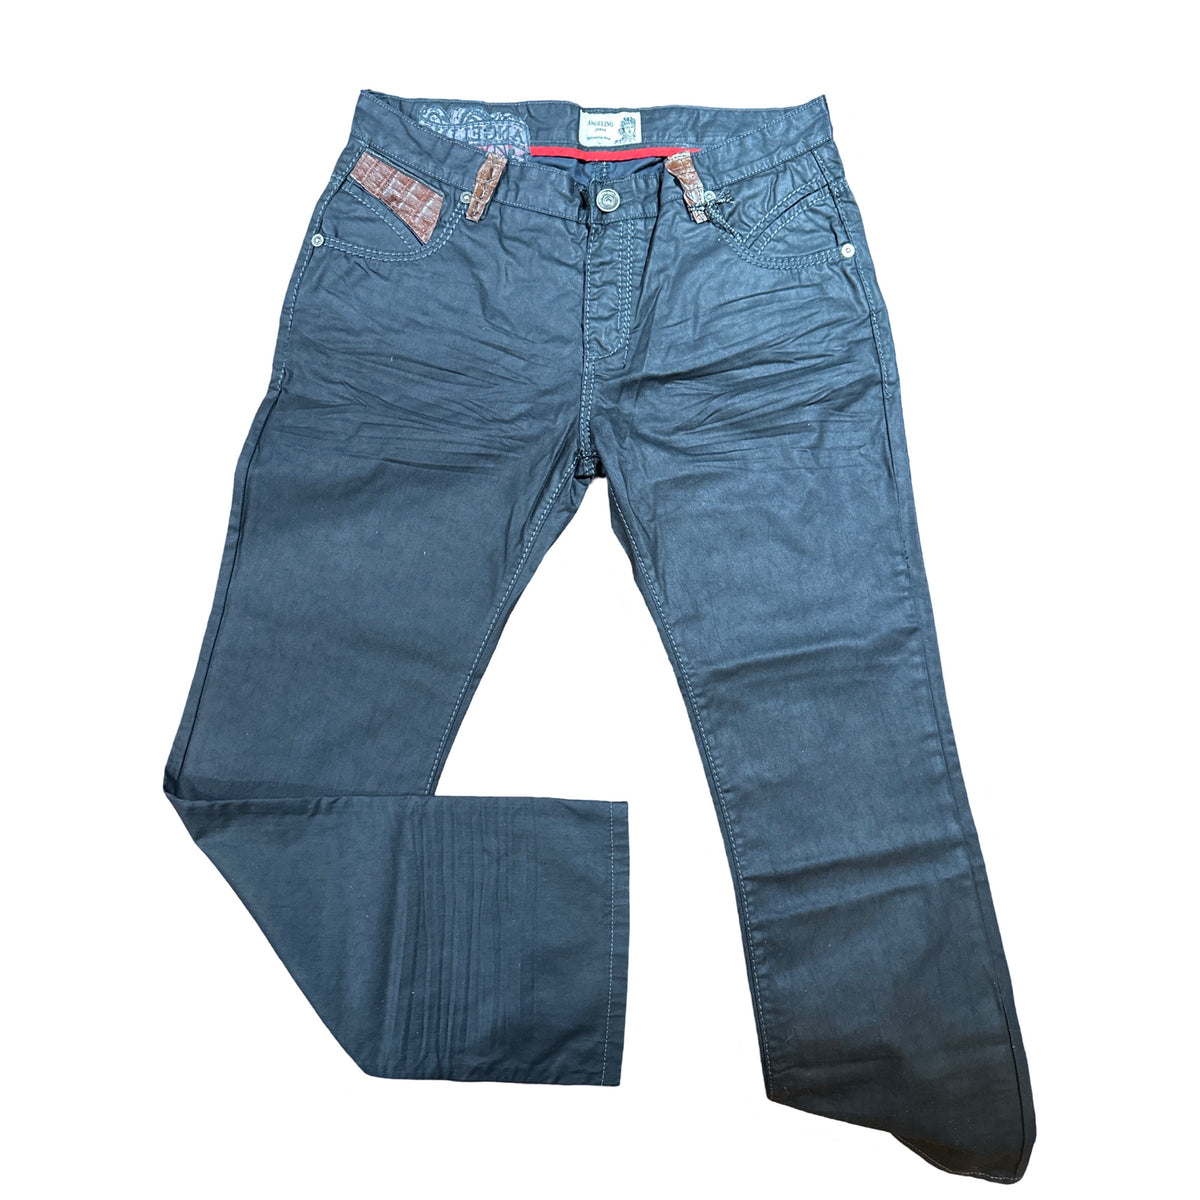 Kashani x Angelino Jeans w/ Brown Alligator Pocket Flaps - Dudes Boutique